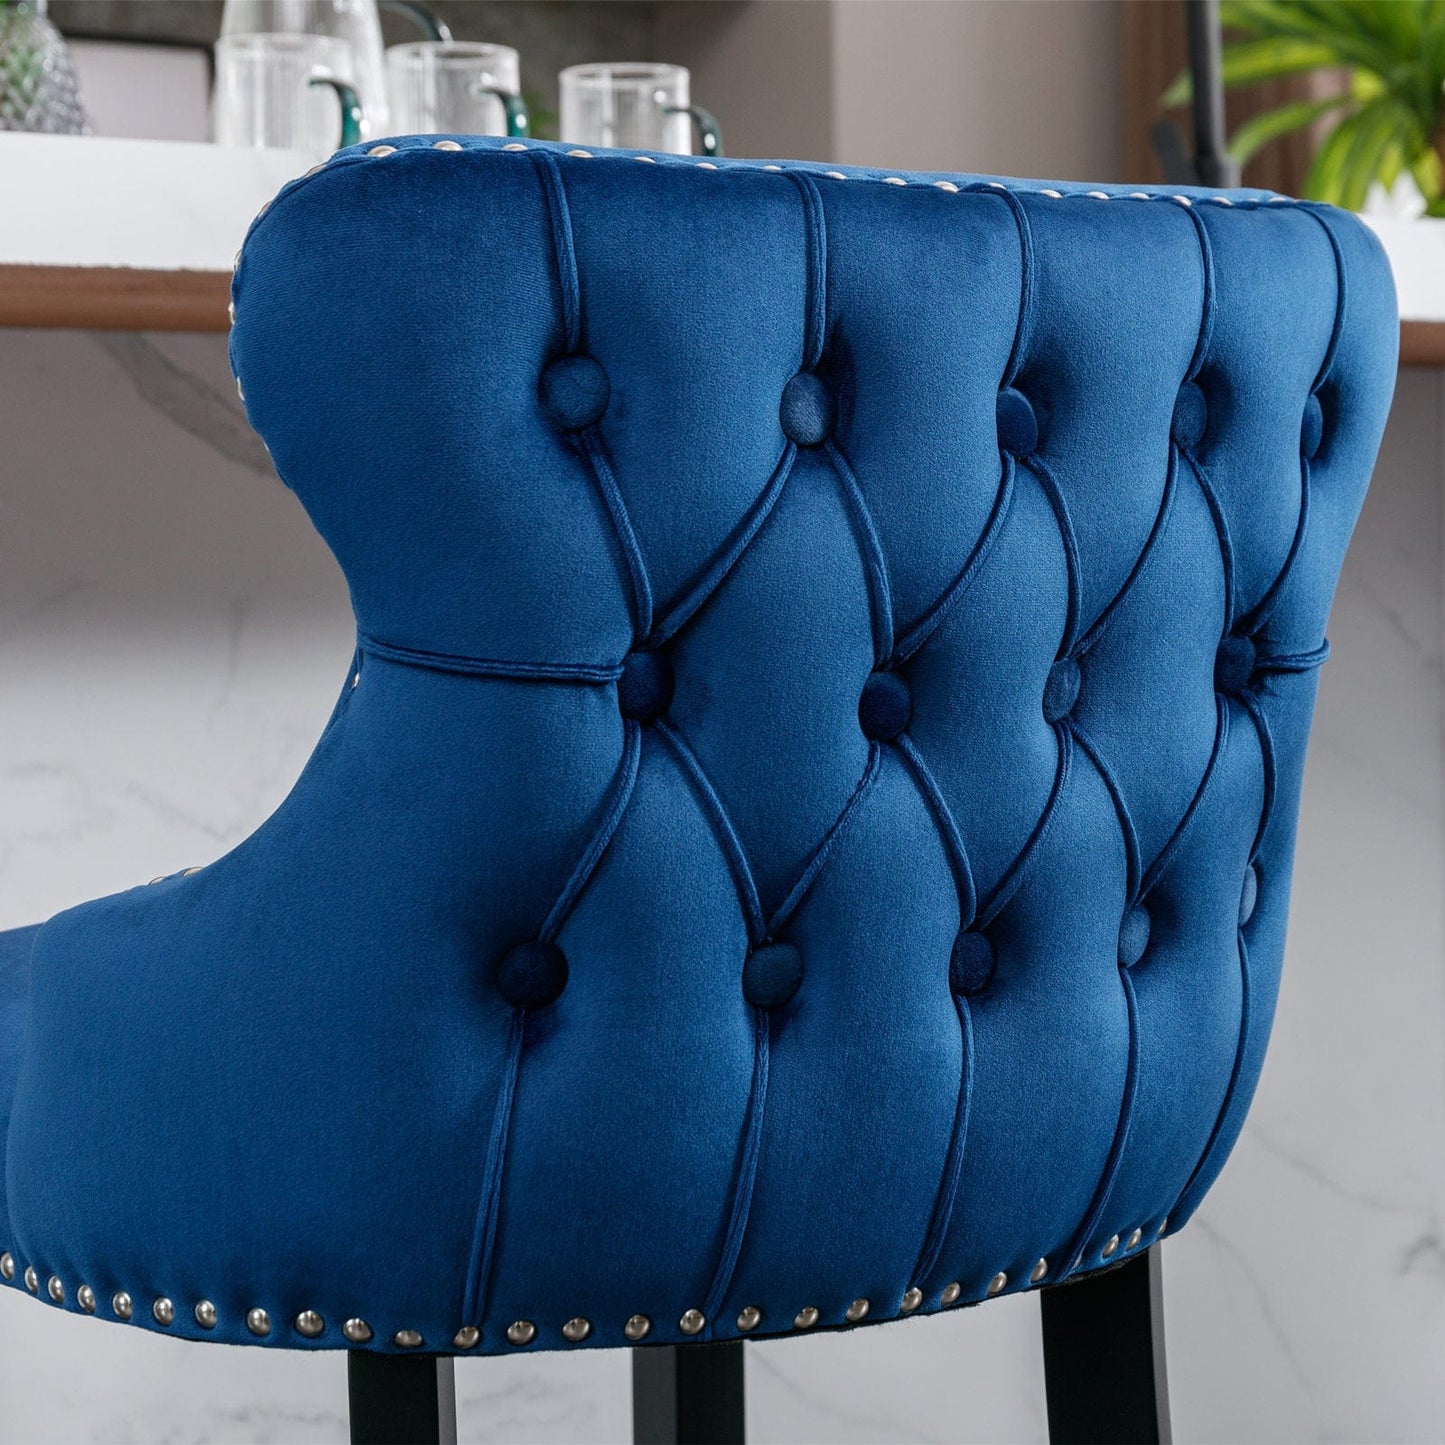 1st Choice Furniture Direct Barstool Set 1st Choice Modern Velvet Button Tufted Barstools in Blue Finish (Set-2)